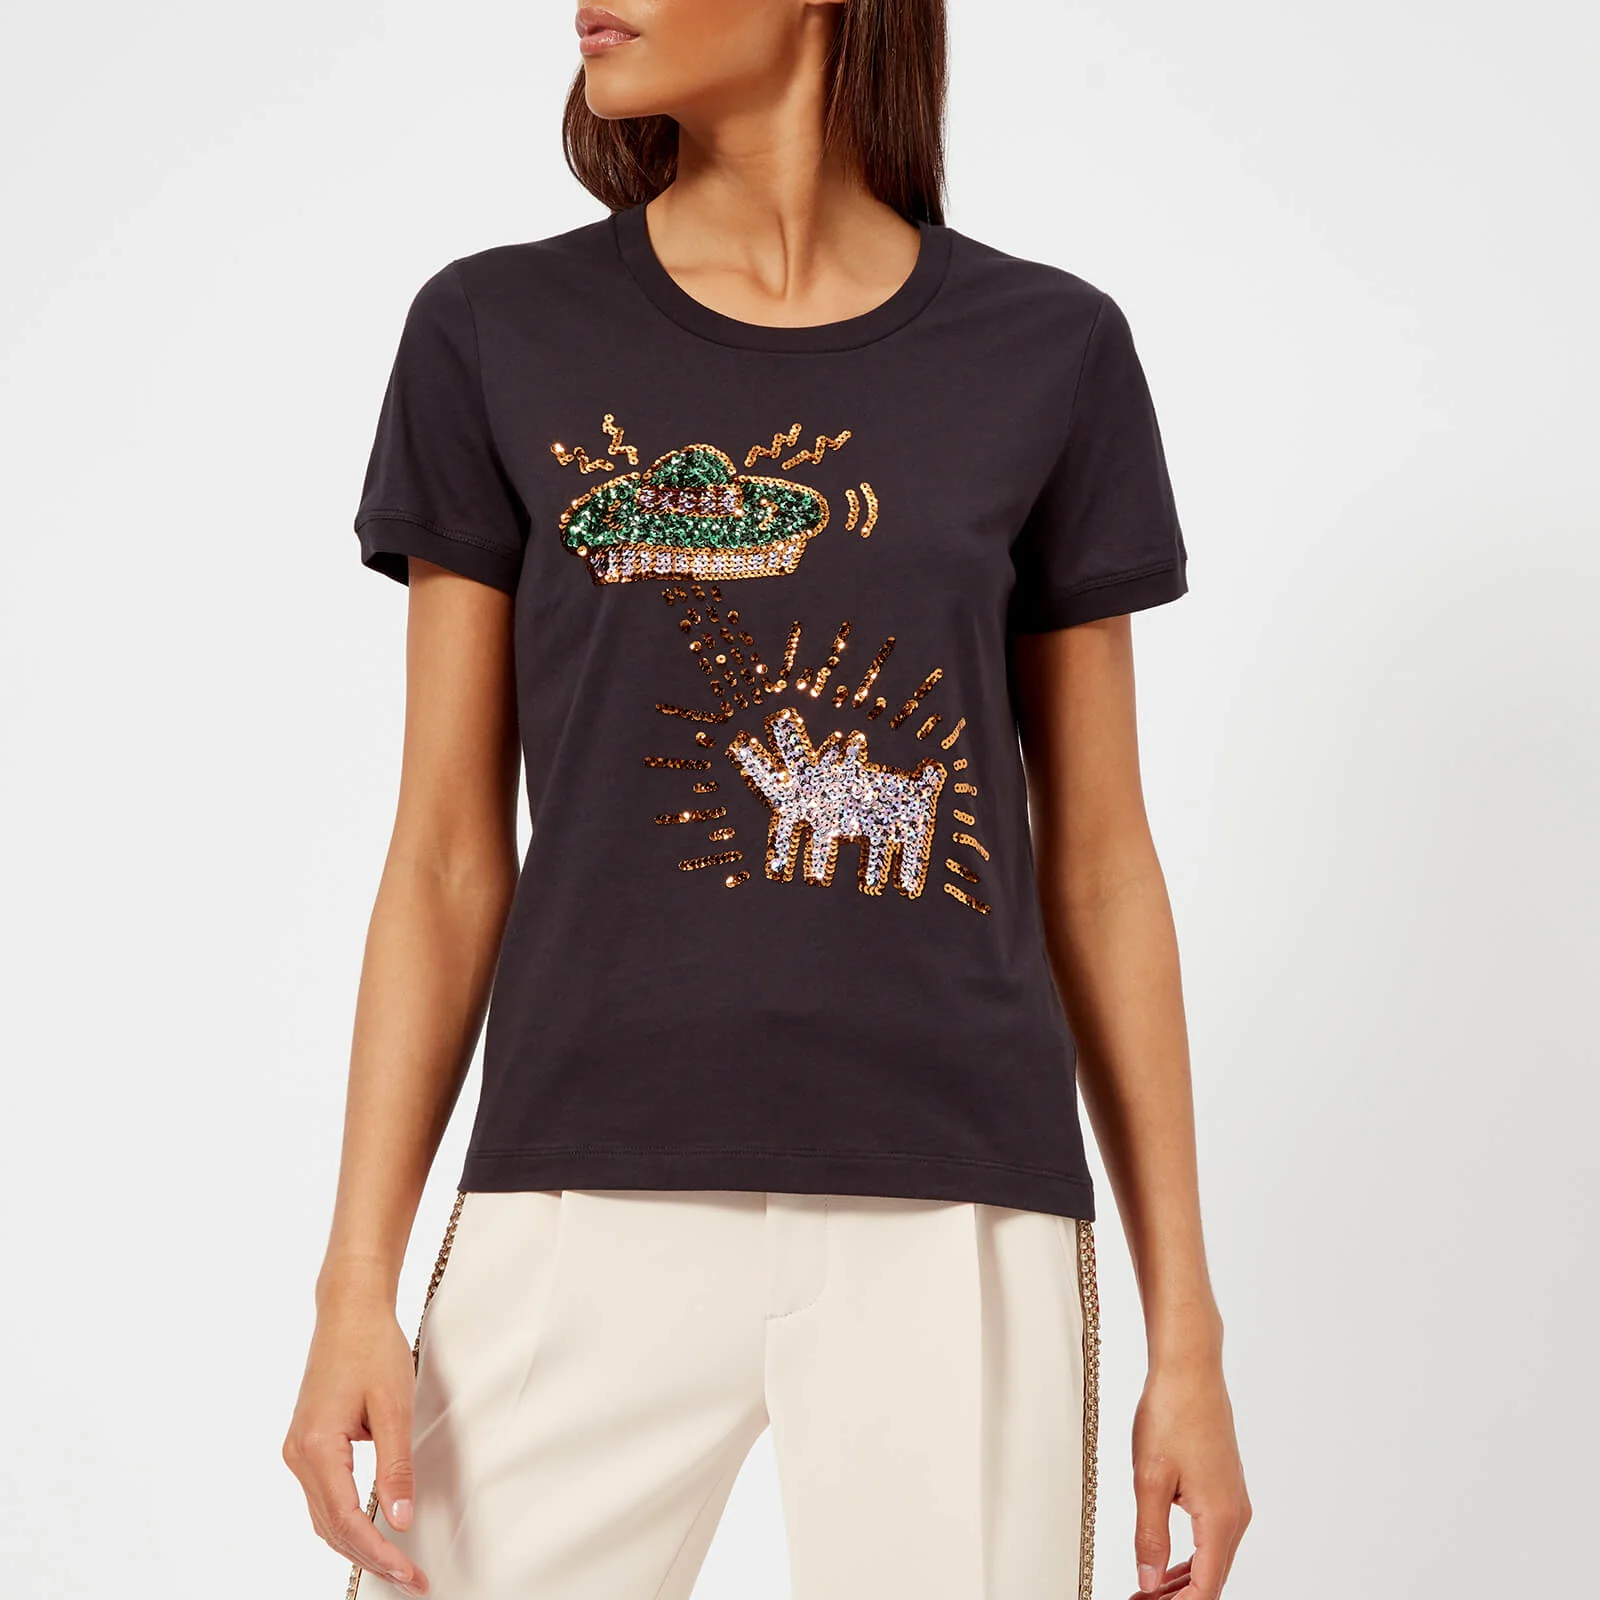 Coach 1941 Women's Coach X Keith Haring Embellished T-Shirt - Dark Shadow Image 1